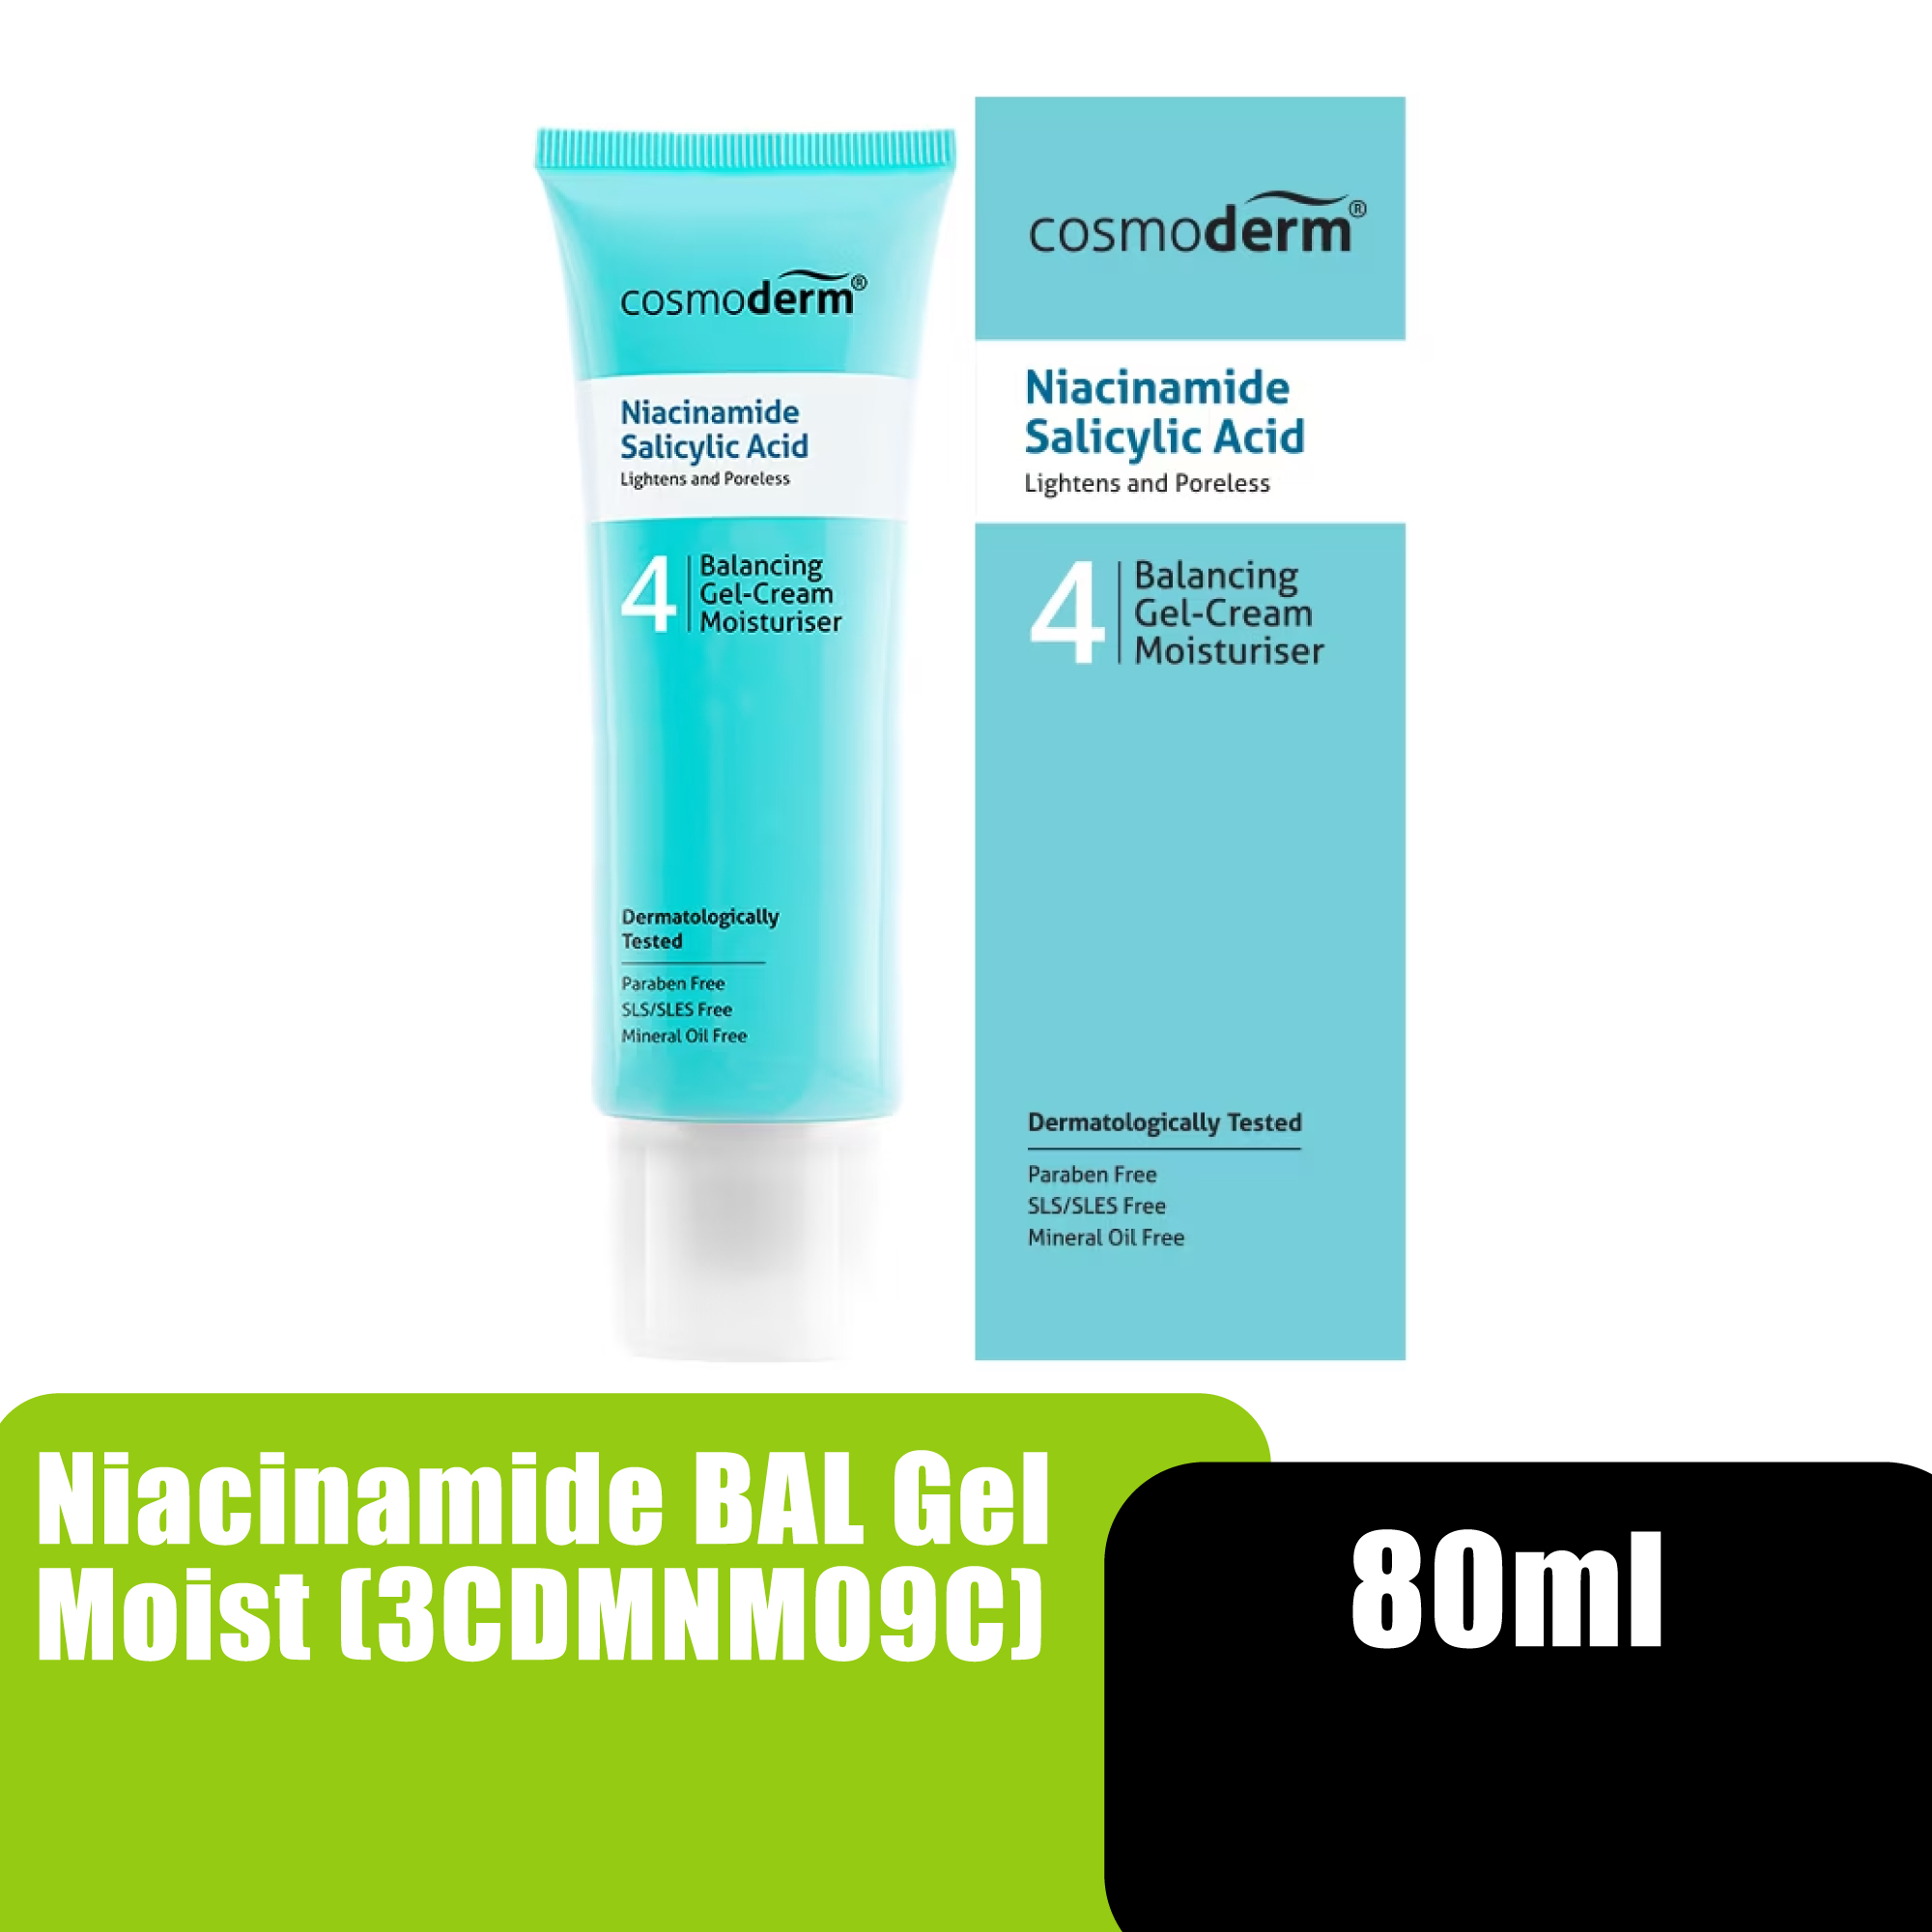 Cosmoderm Niacinamide Salicylic Acid Balancing Gel-Cream Moisturizer 80ml